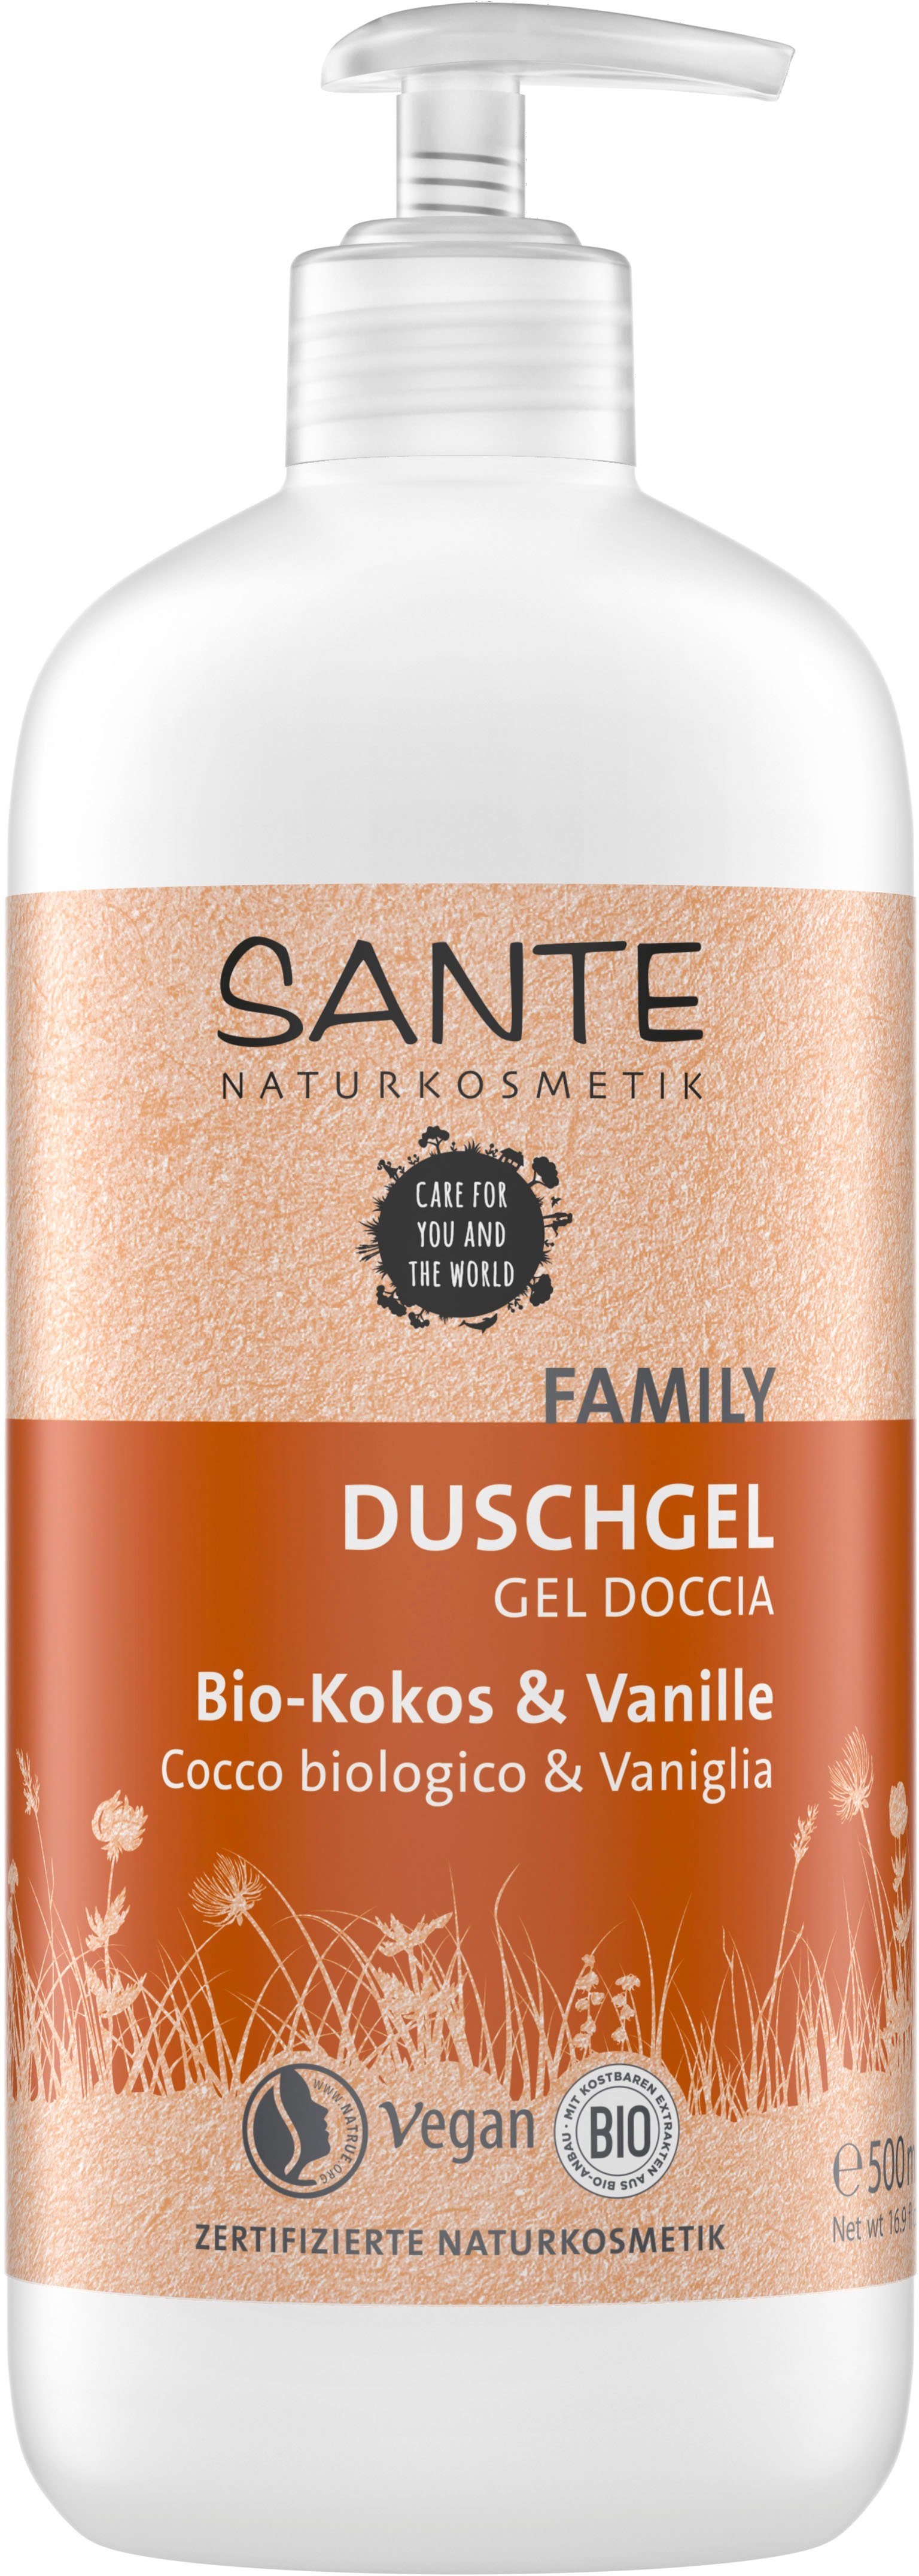 SANTE Duschgel »Bio-Kokos & Vanille« online kaufen | OTTO